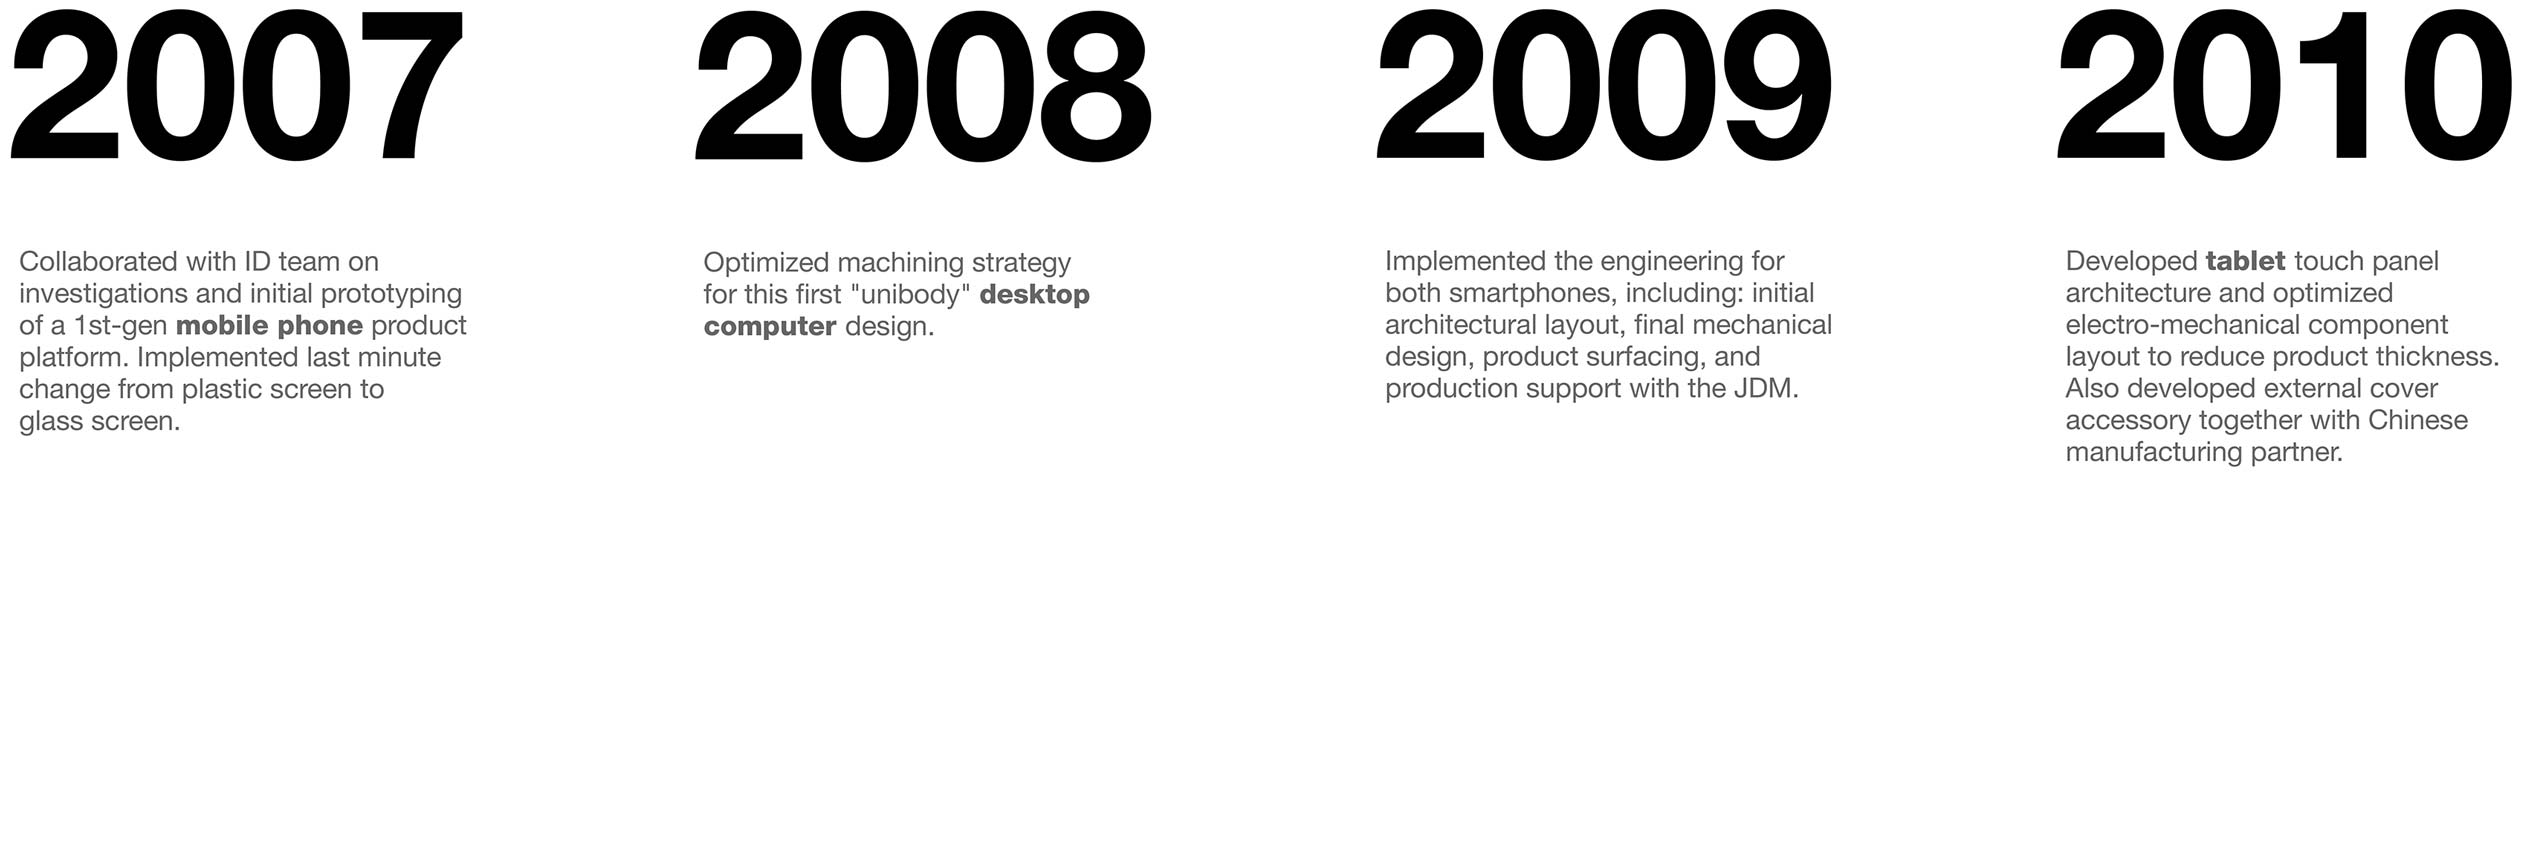 Surfaceink Timeline 2007-2010